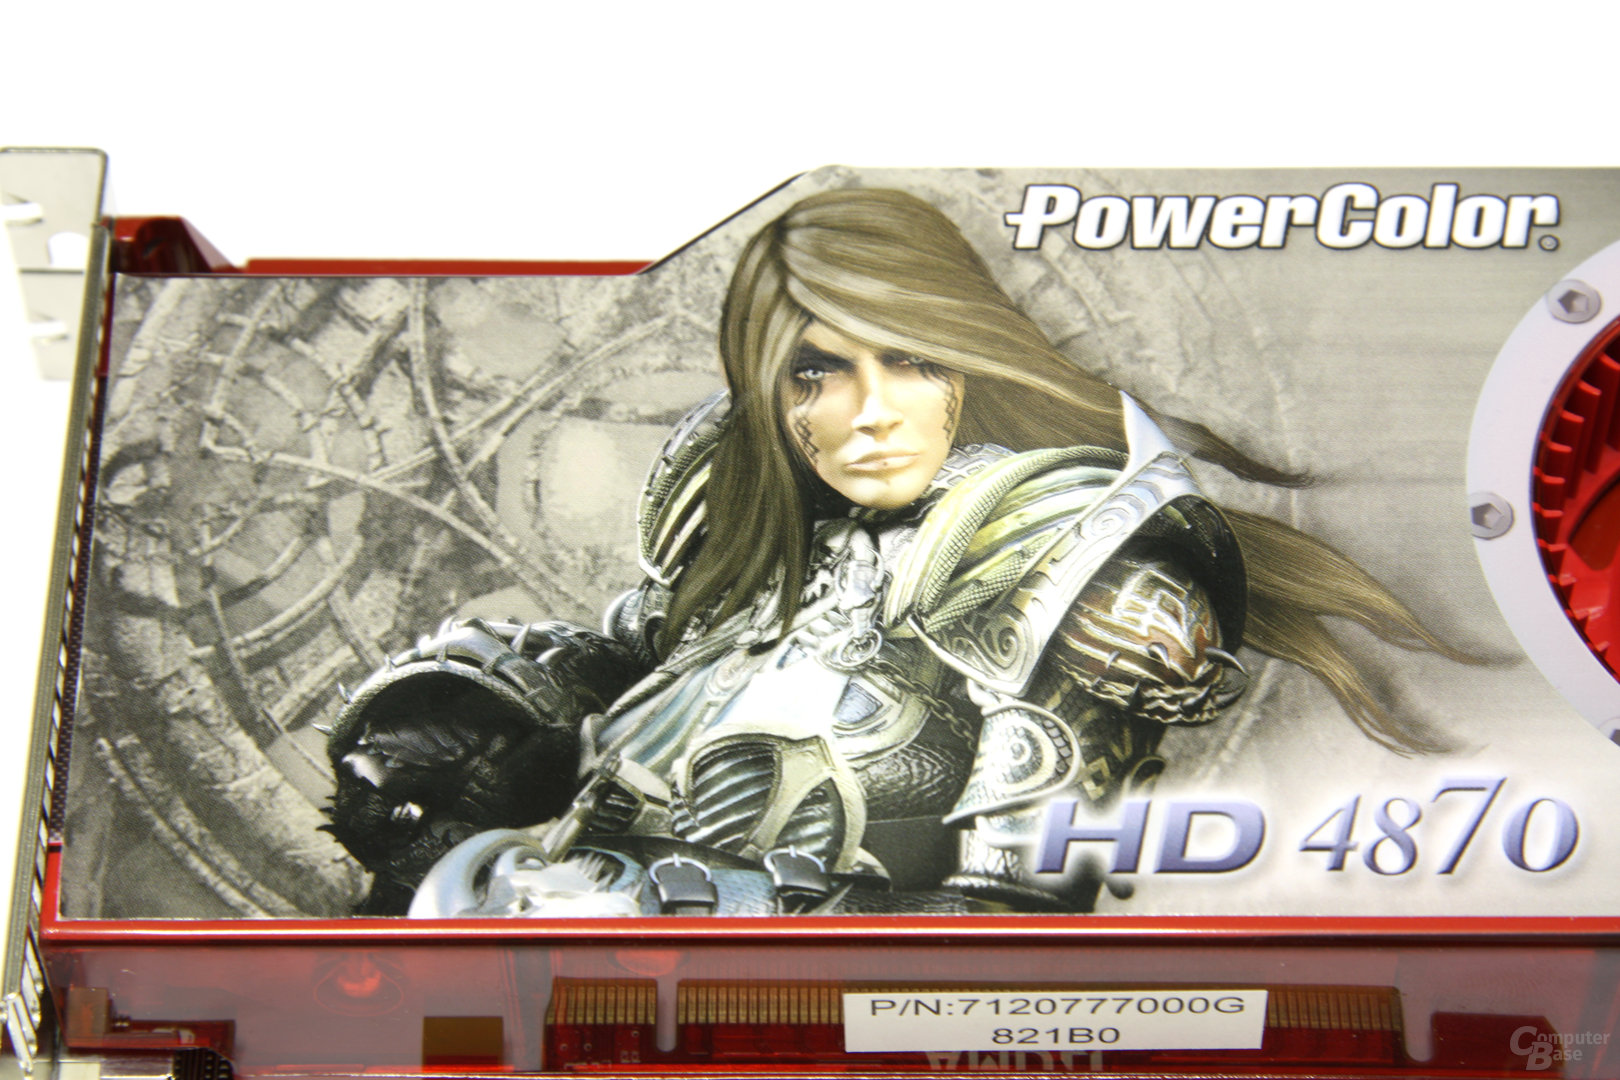 PowerColor Radeon HD 4870 Aufkleber